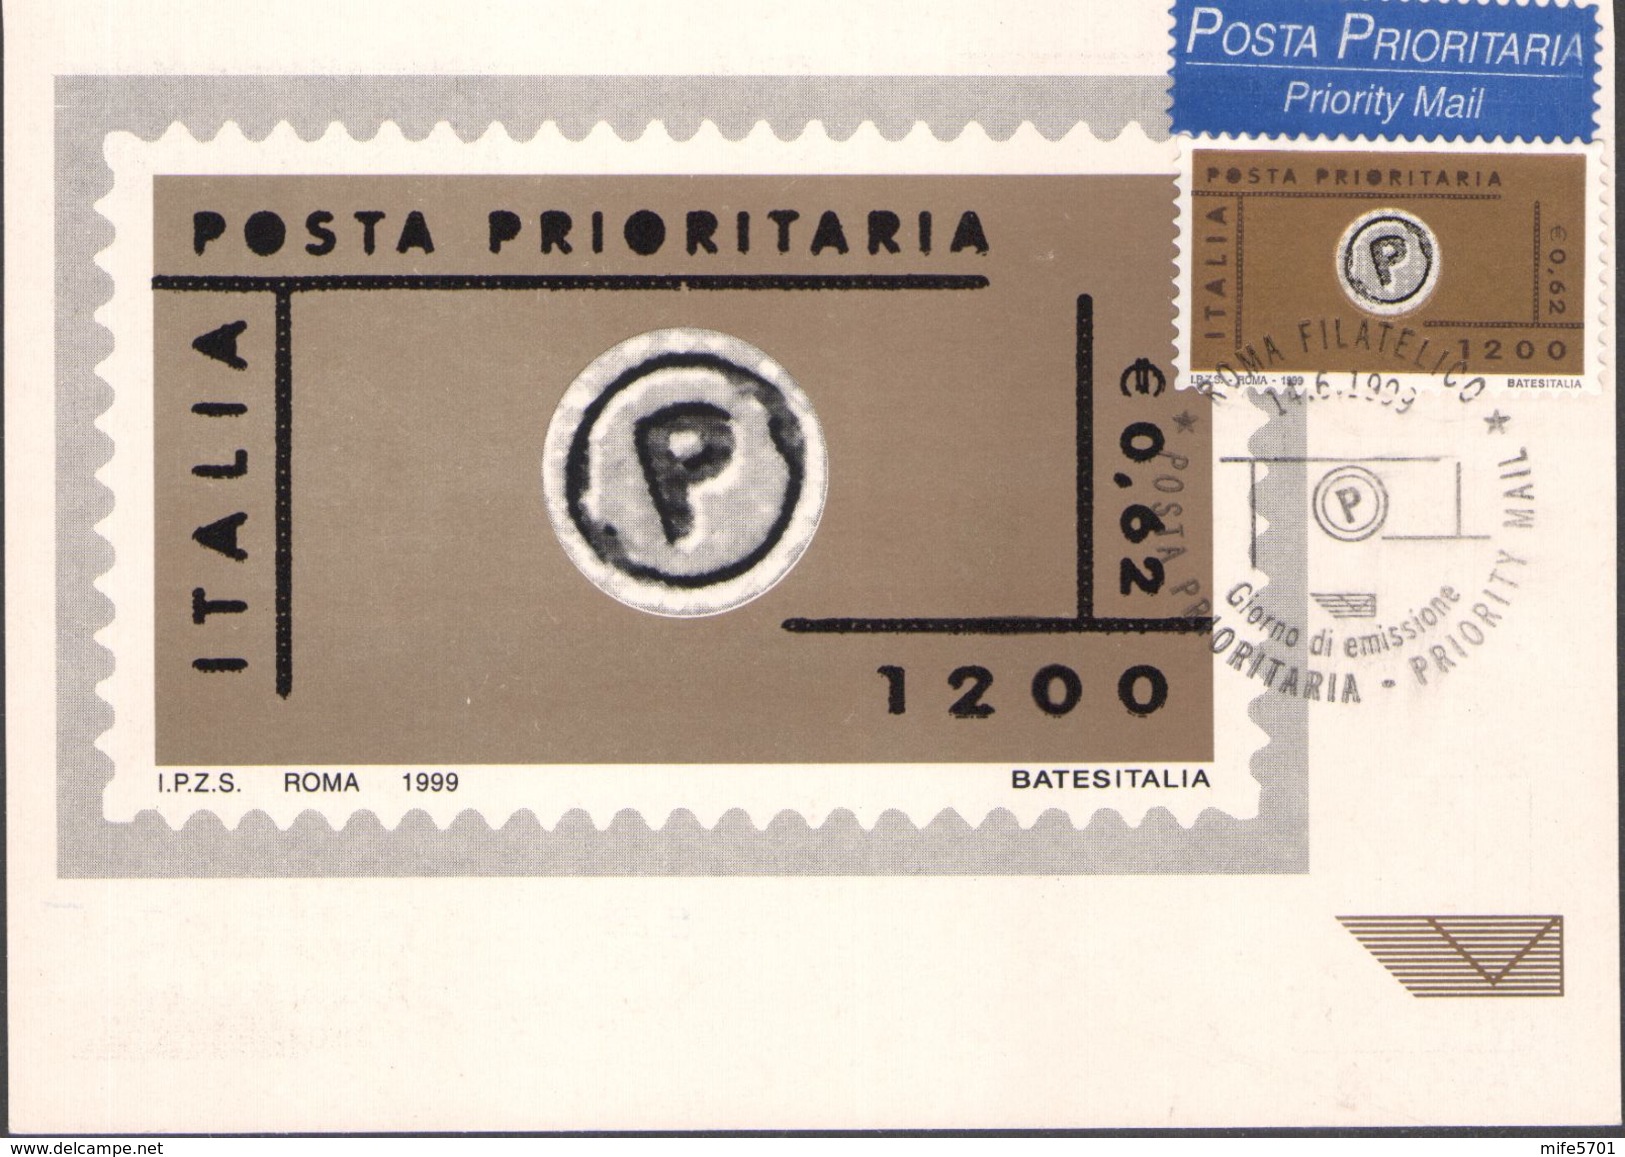 MAXCARD - CARTOLINA POSTA PRIORITARIA FRANCOBOLLO DA L. 1200 EURO 0,62 - 14.6.1999 - CATALOGO SASSONE: 2419 - FDC - Cartoline Maximum